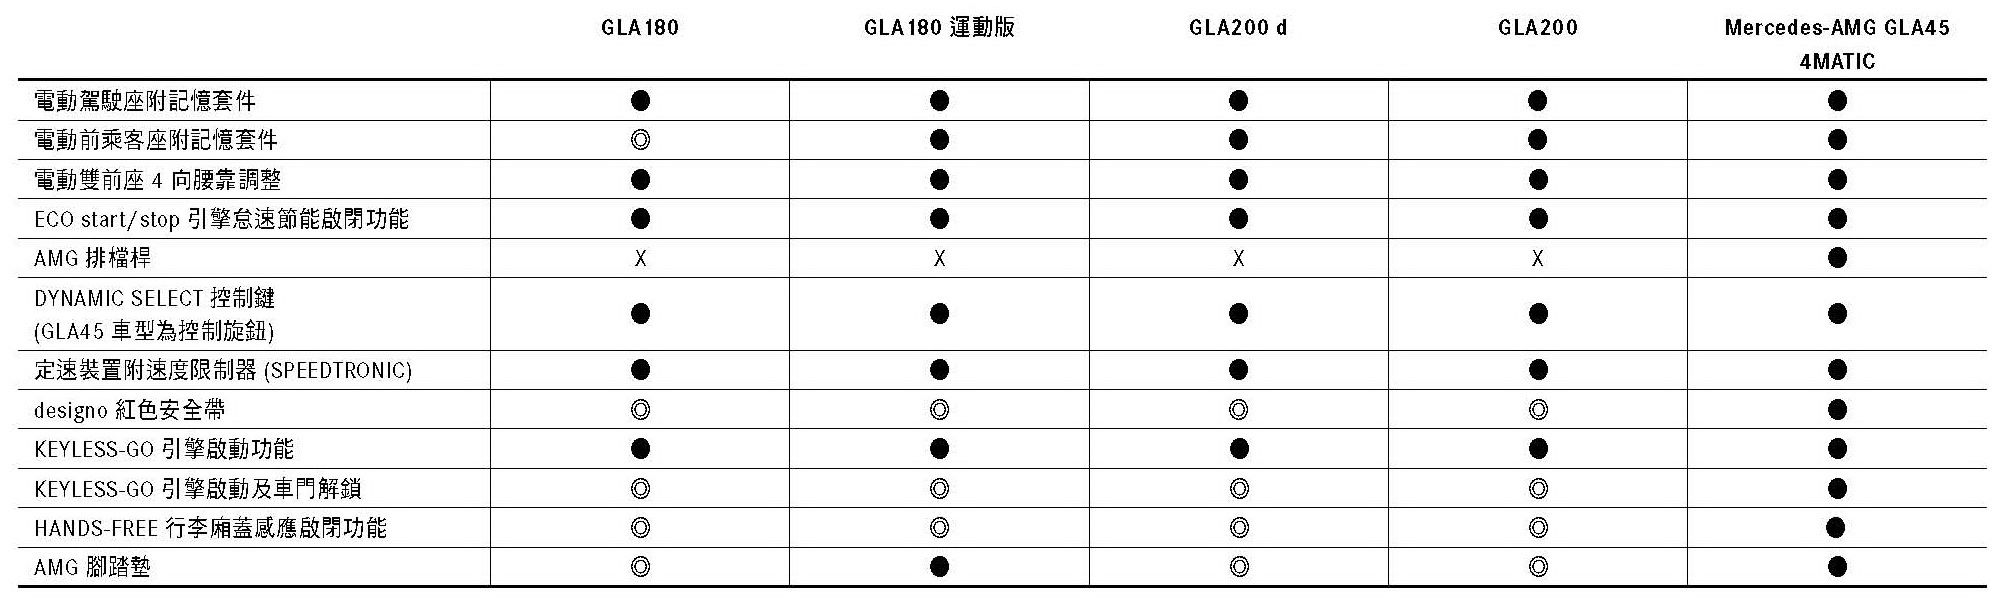 MY1718 GLA規格配備表20170510_final_頁面_09